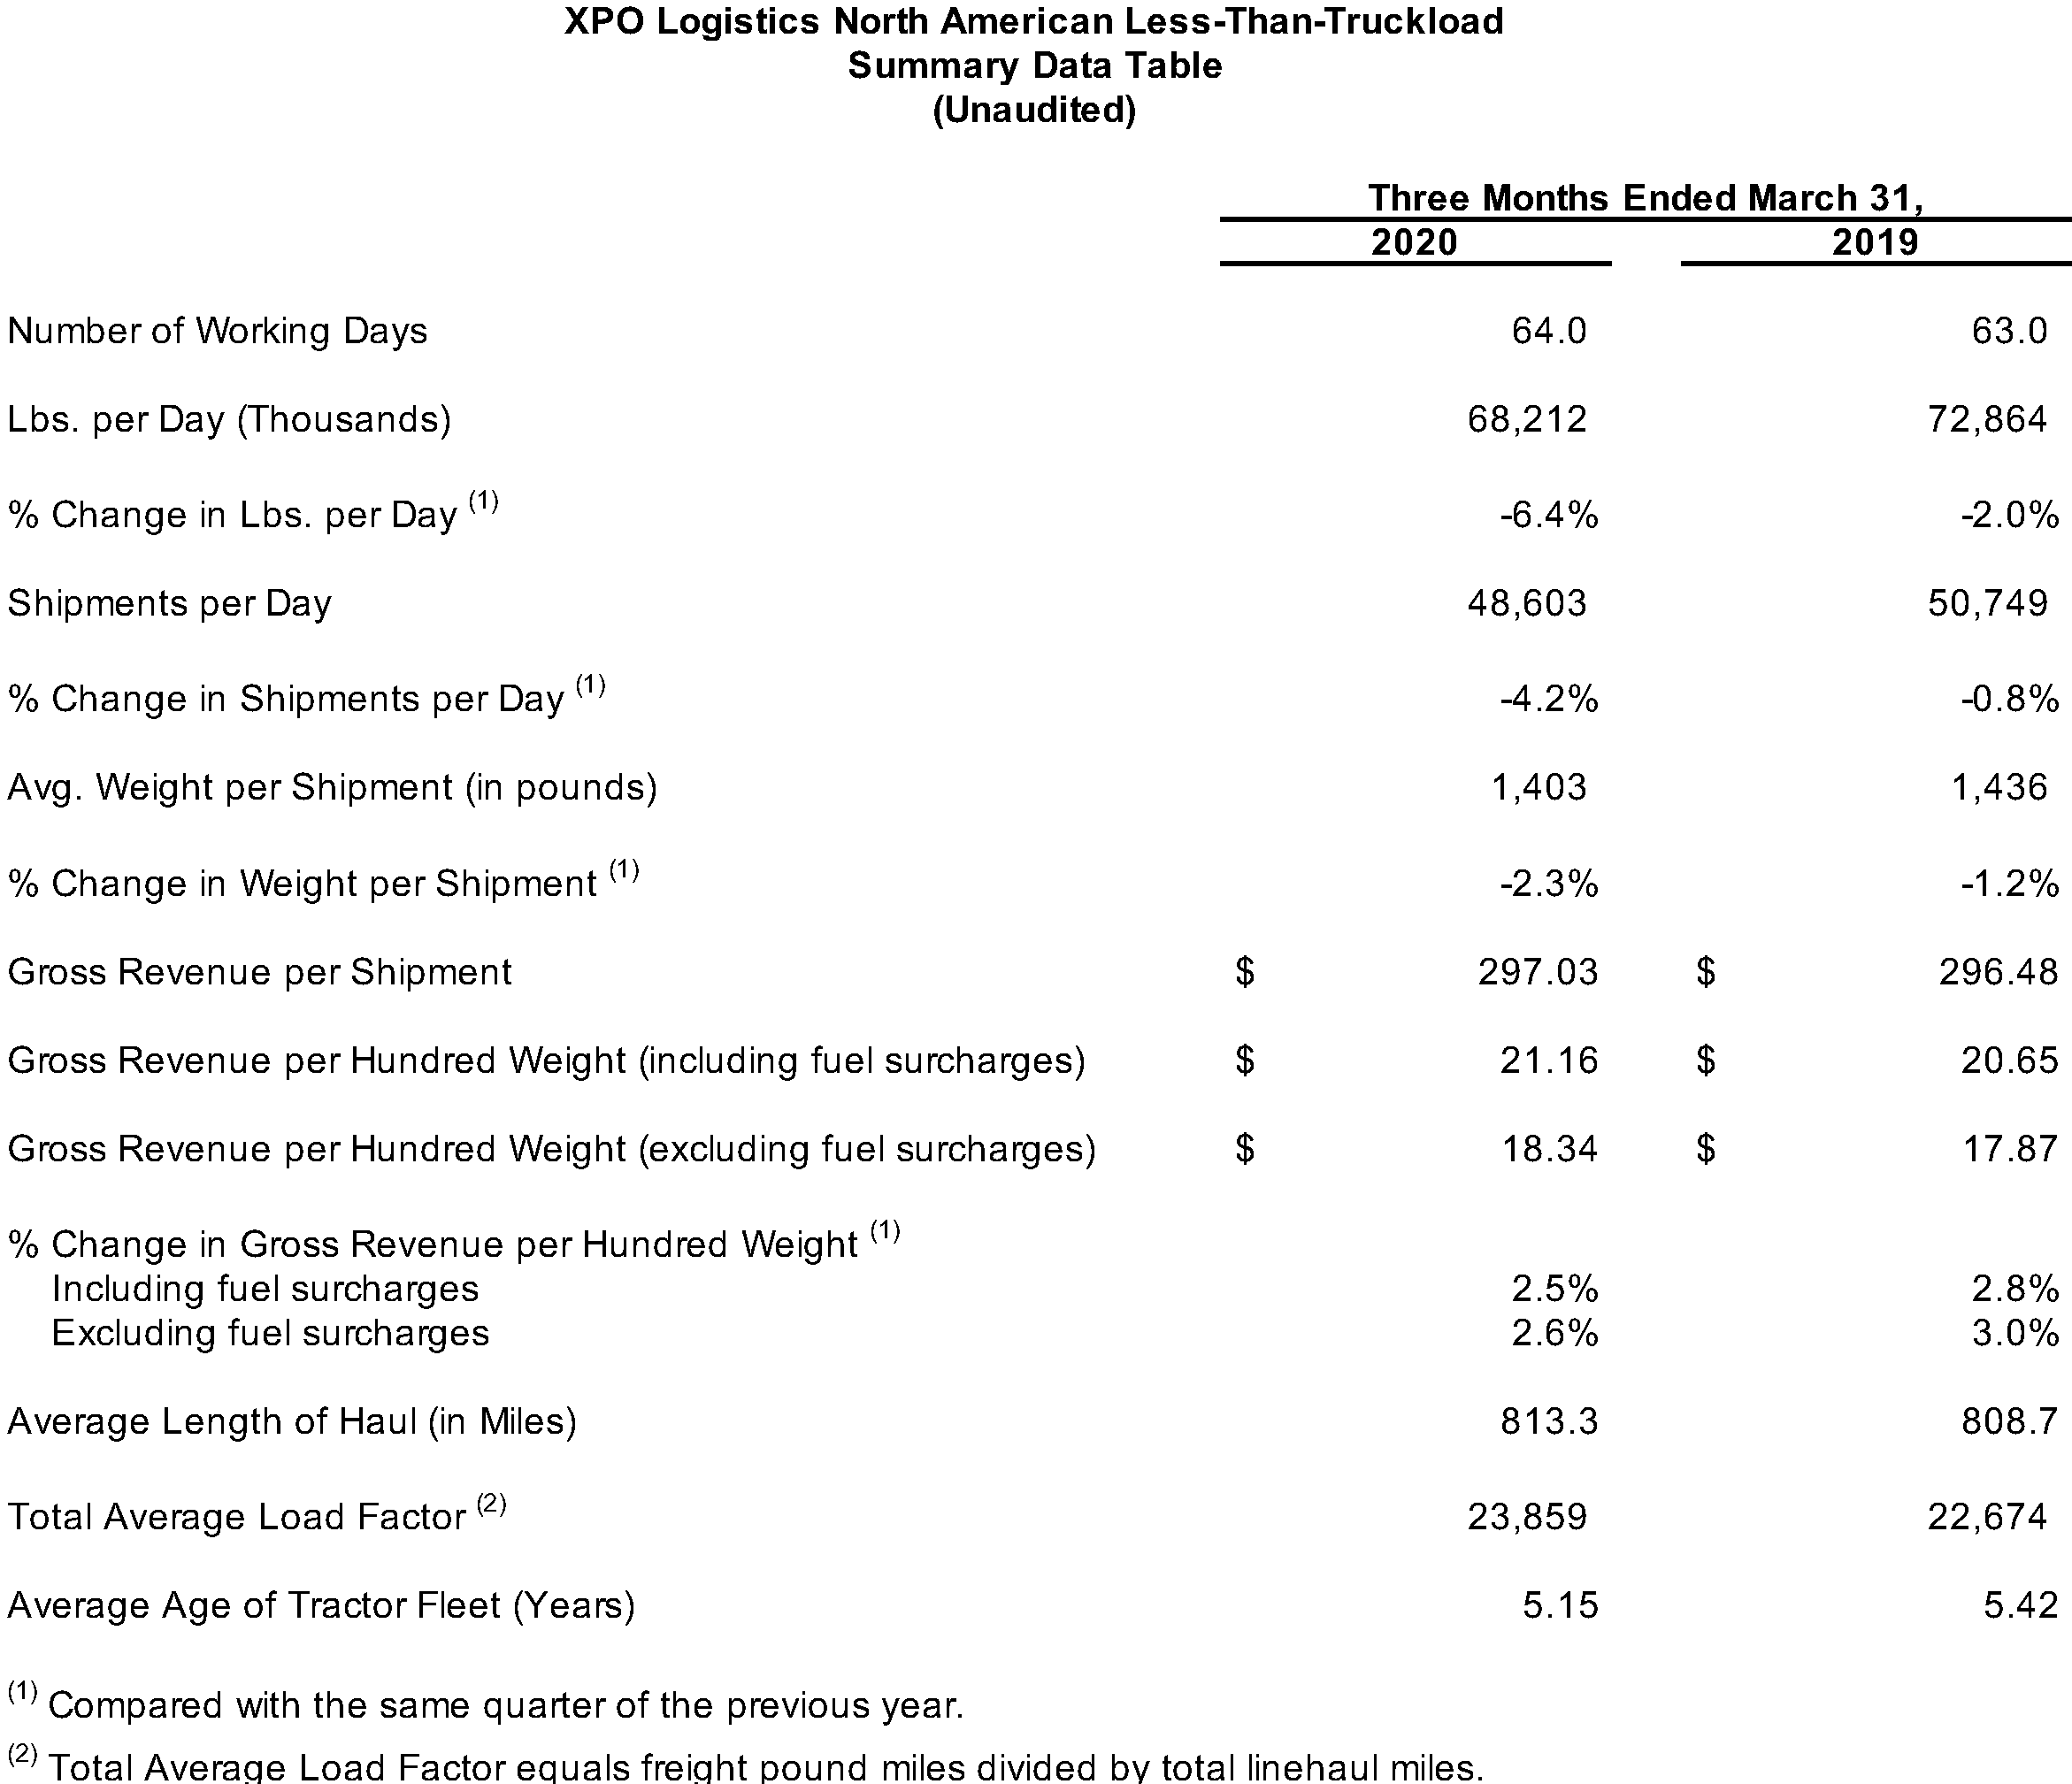 North American LTL Summary Data Table